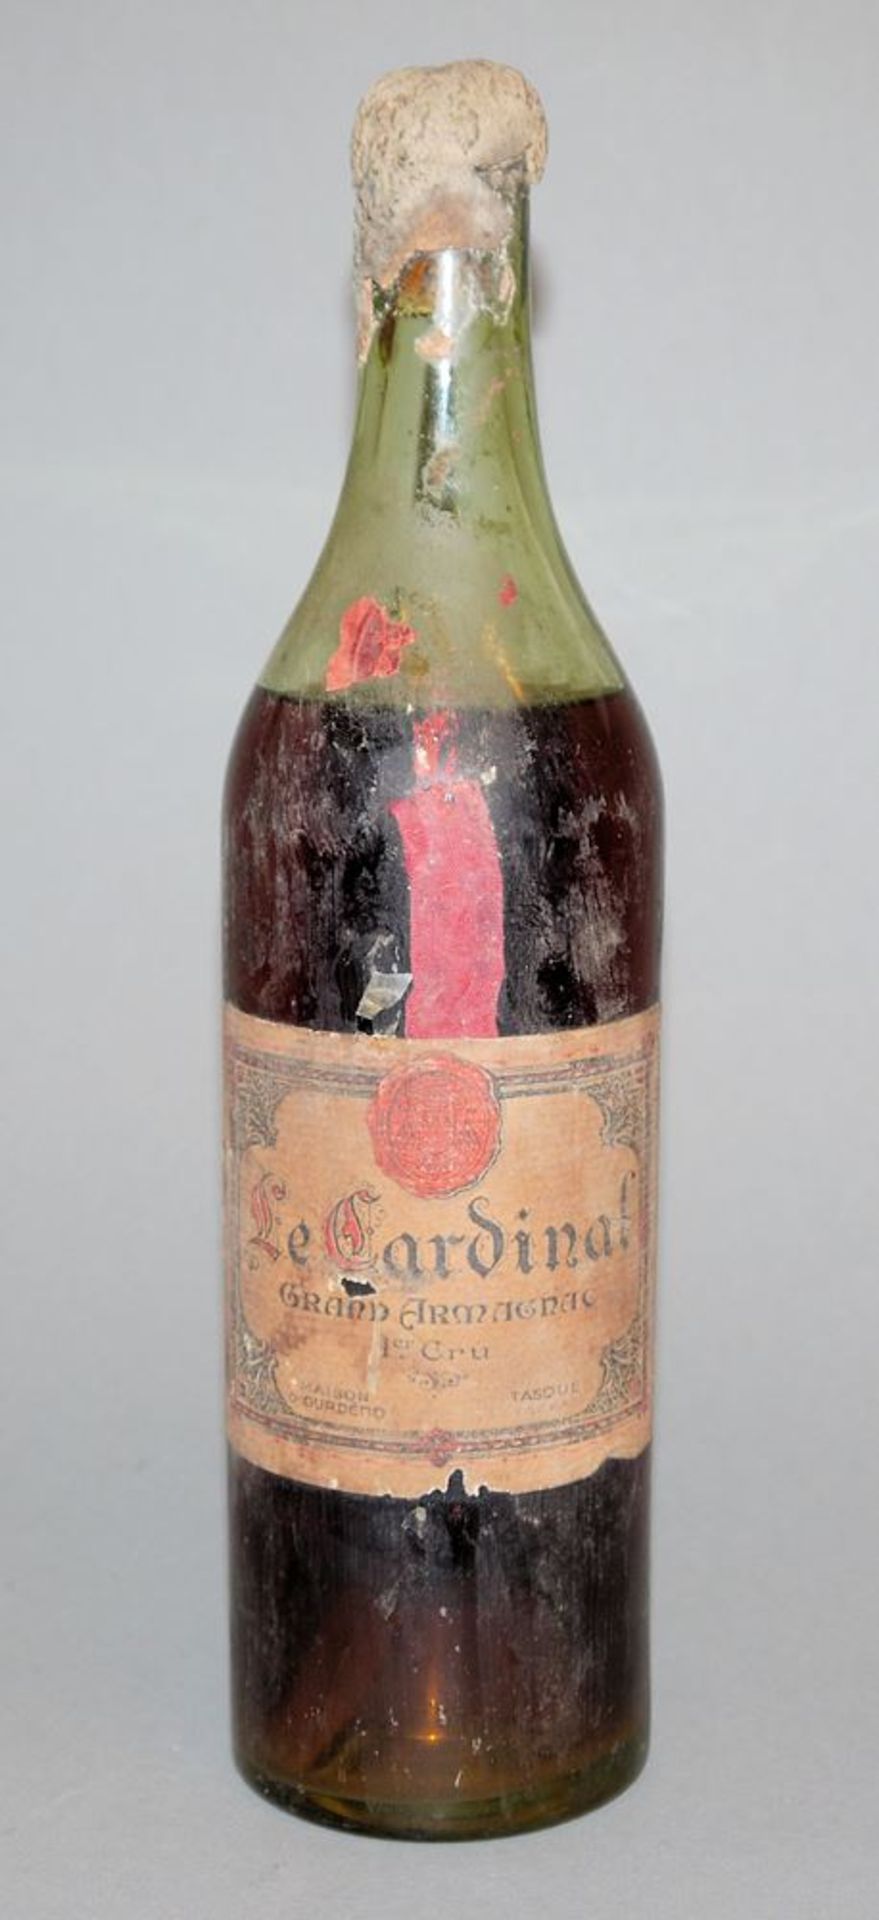 1 bottle "Le Cardinal", Grand Armagnac Premier Cru, vintage rarity<228;t circa 1900